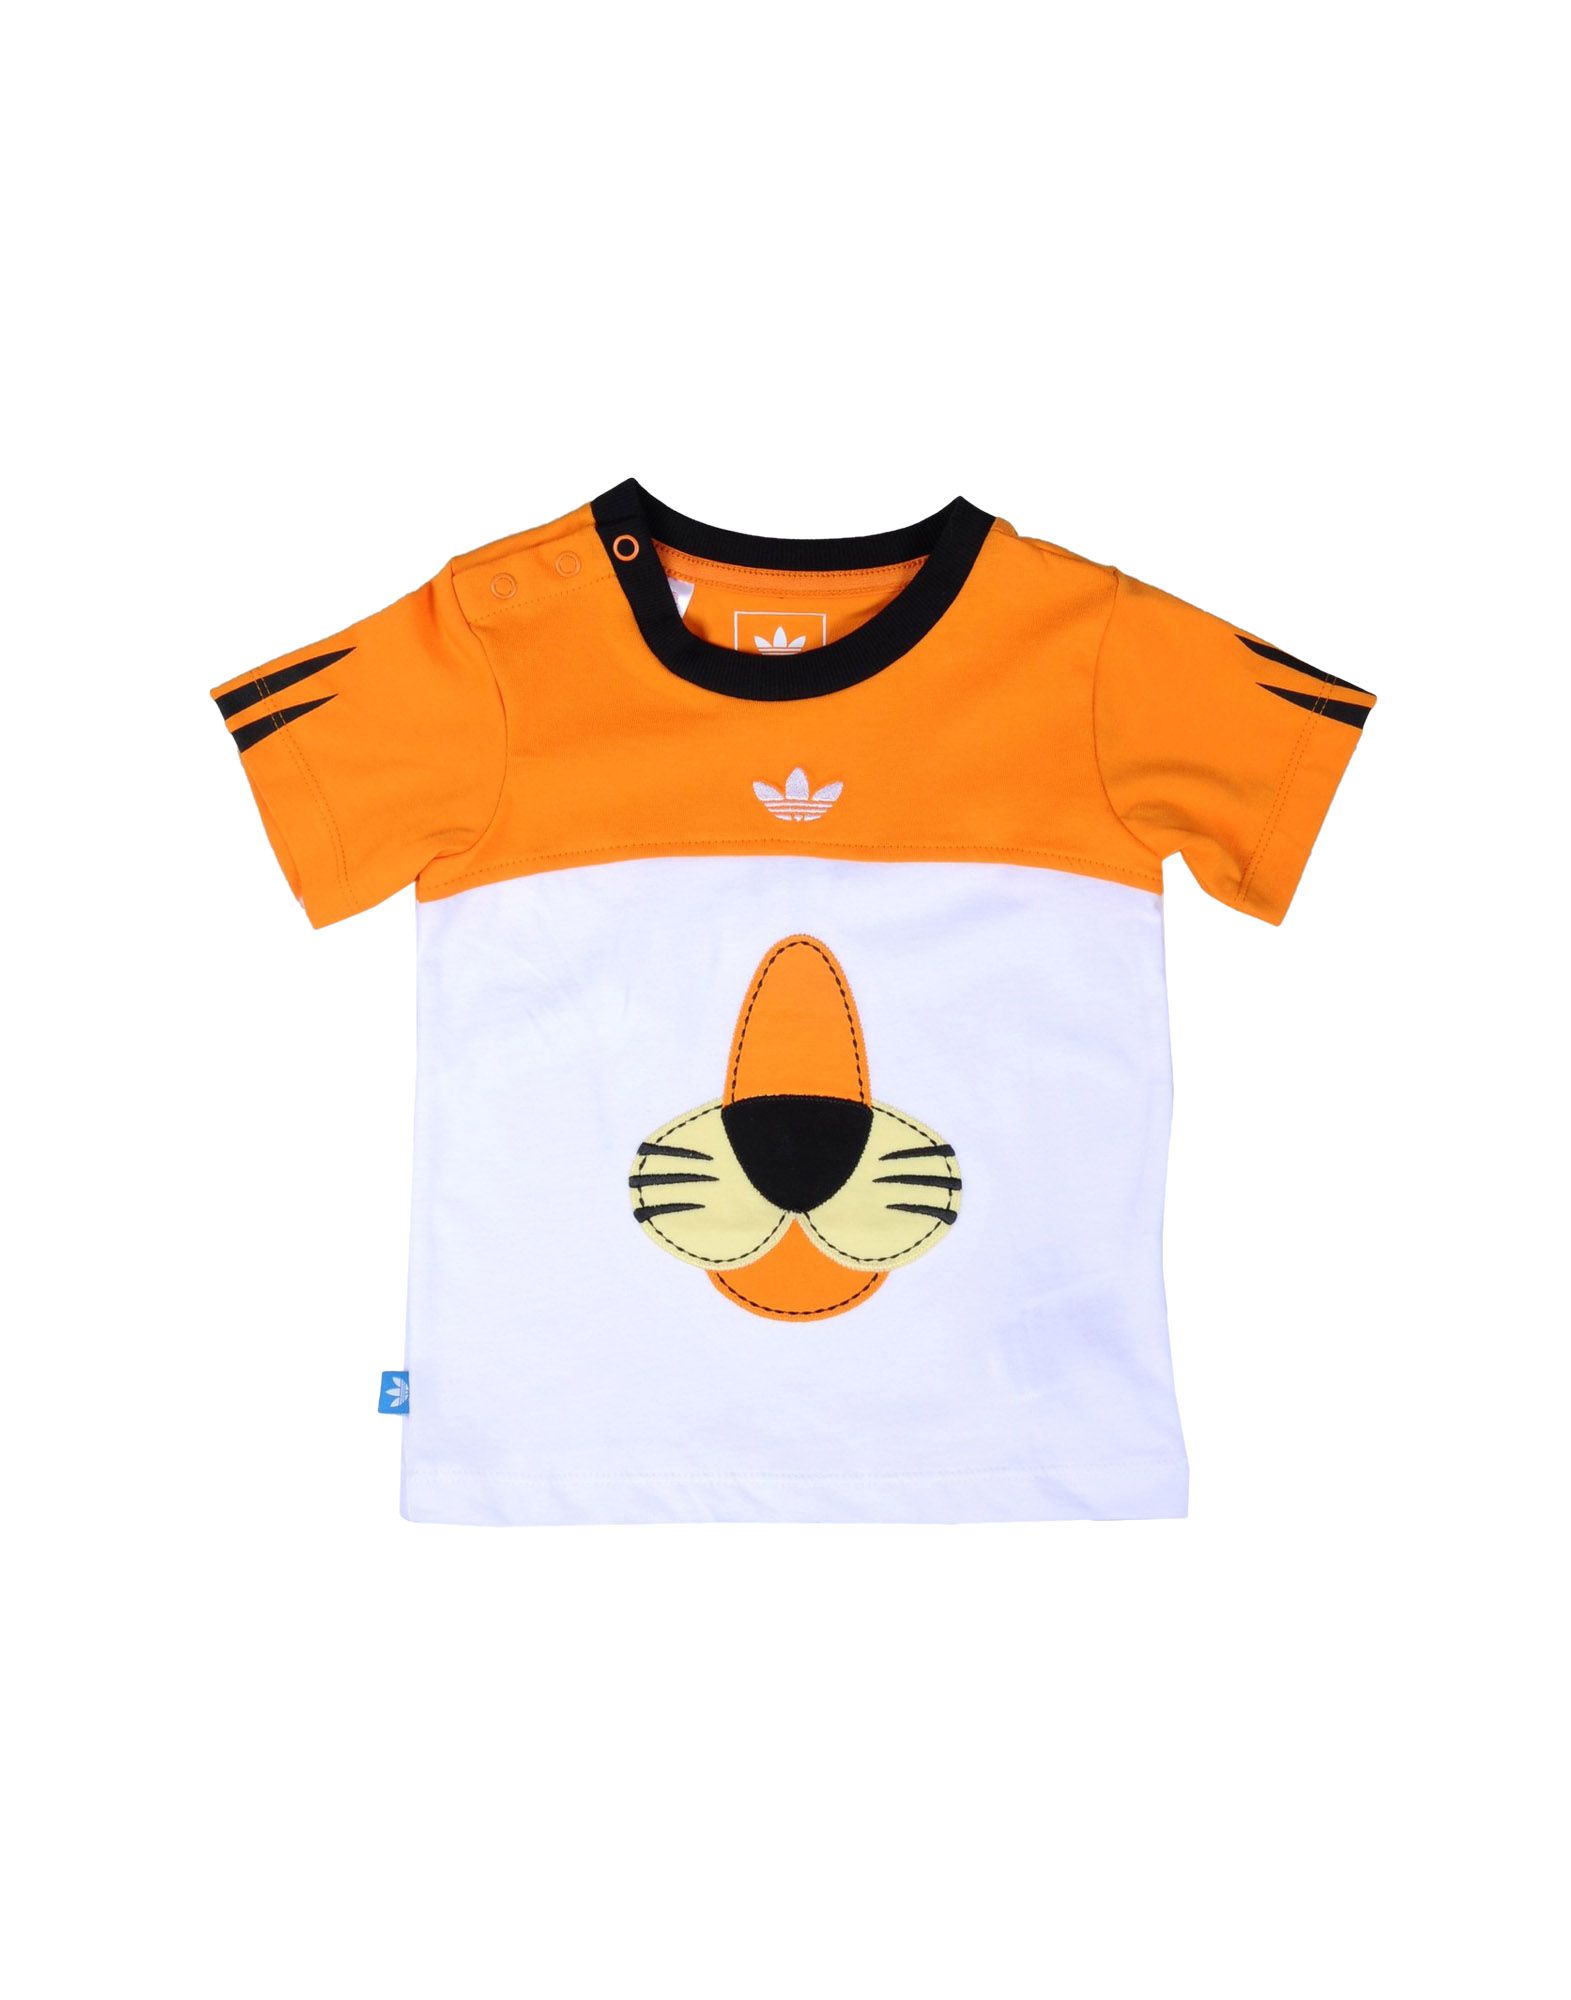 Foto Adidas Originals Camisetas De Manga Corta Naranja foto 941146